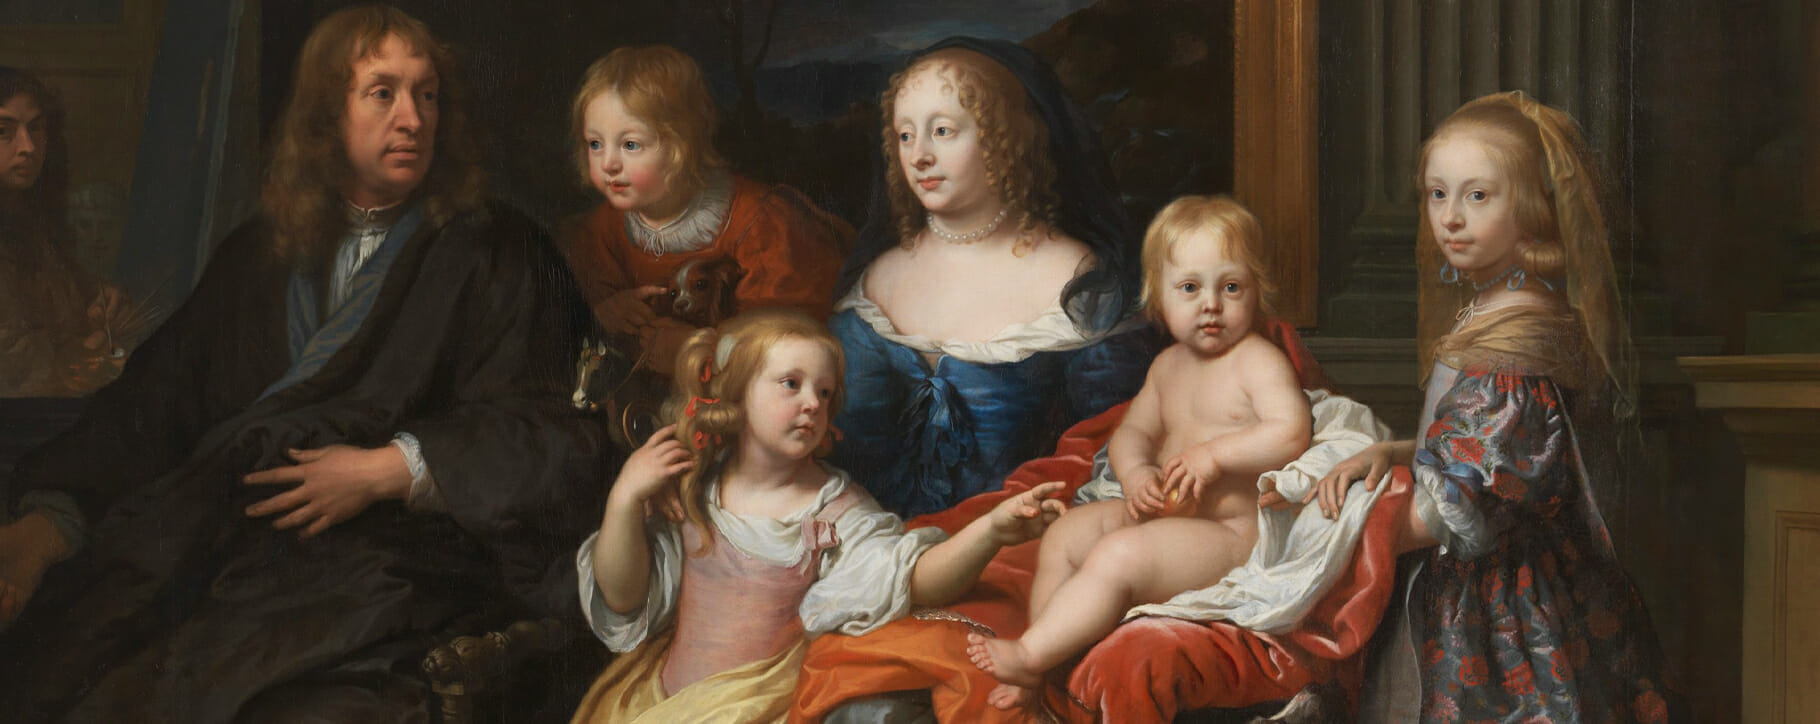 Family portrait 17th century